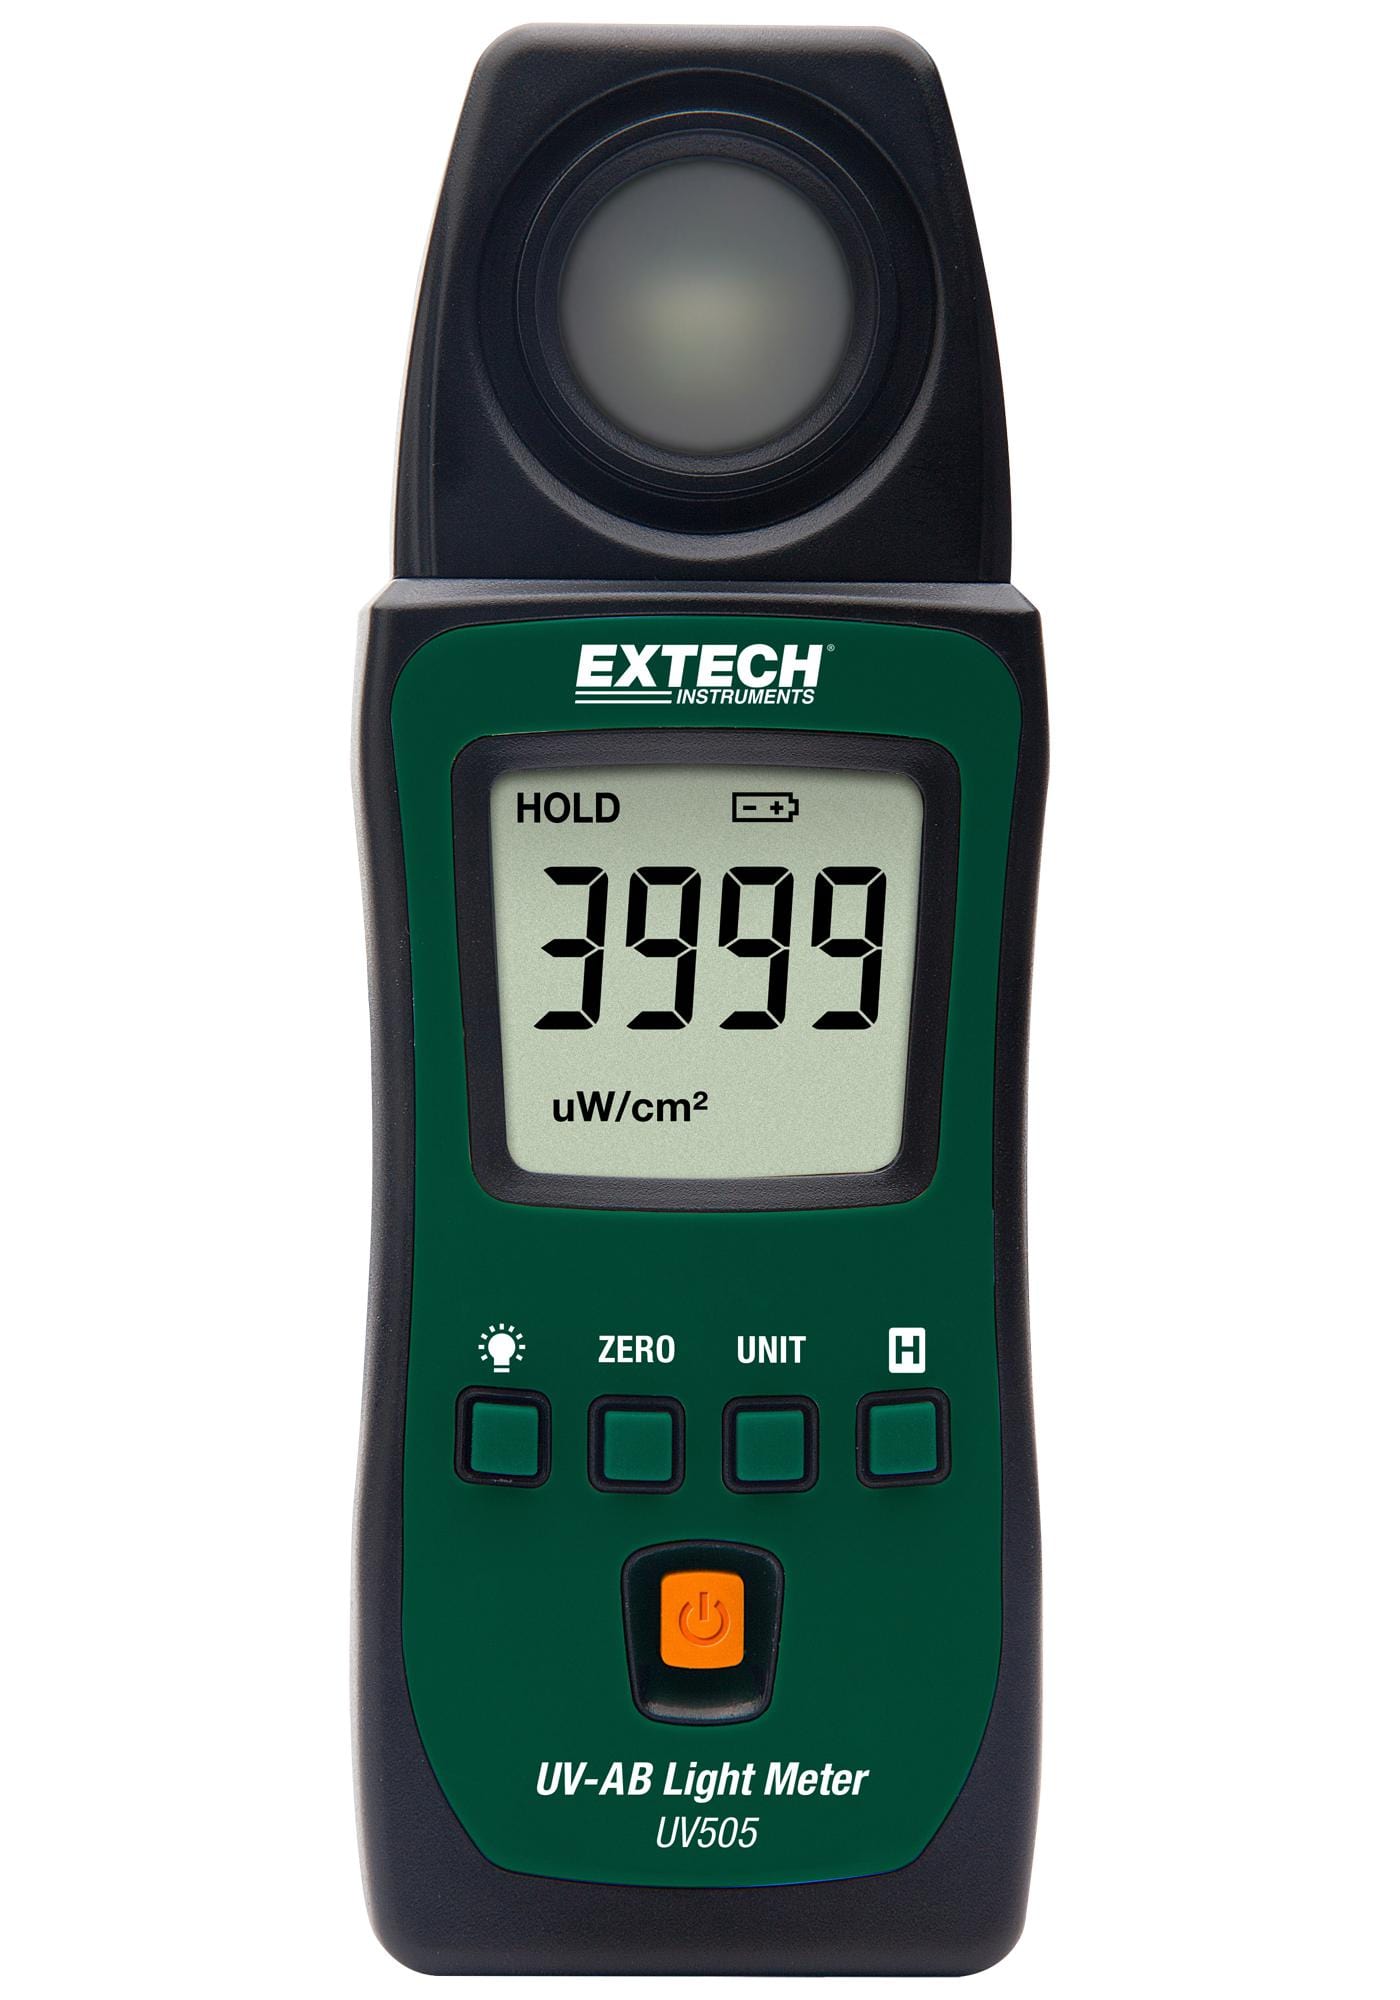 UV505 UV-AB LIGHT METER, 1 TO 3999 UW/CM2 EXTECH INSTRUMENTS